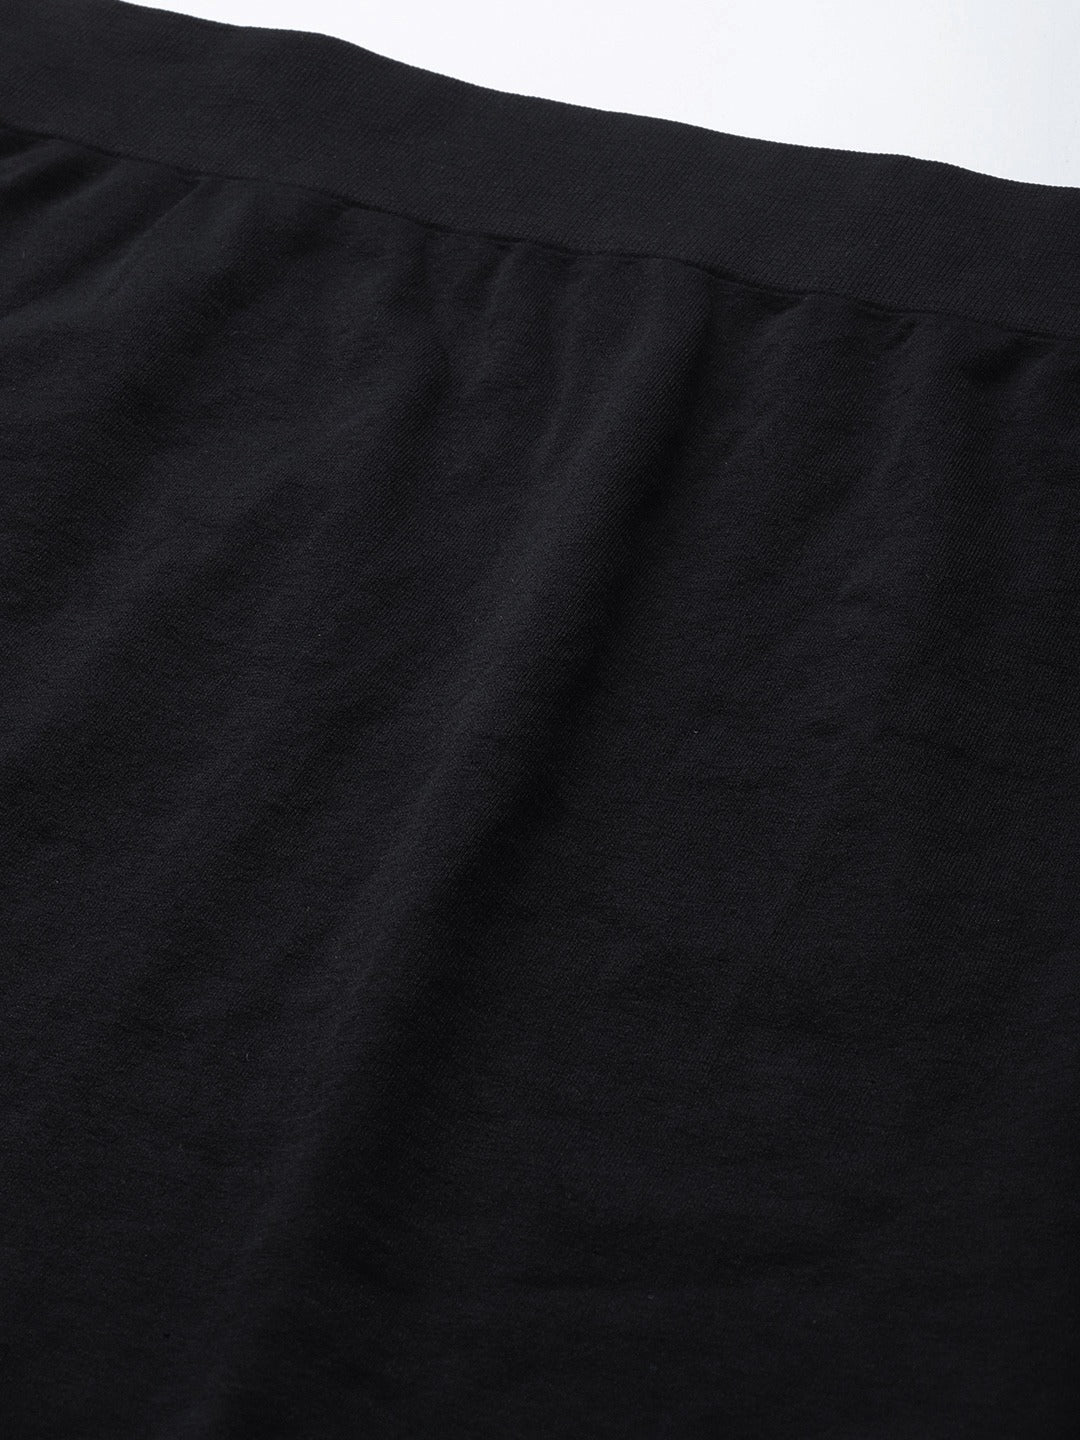 Inddus Black Solid Micro Fiber Slimming Skirt Shapewear - Inddus